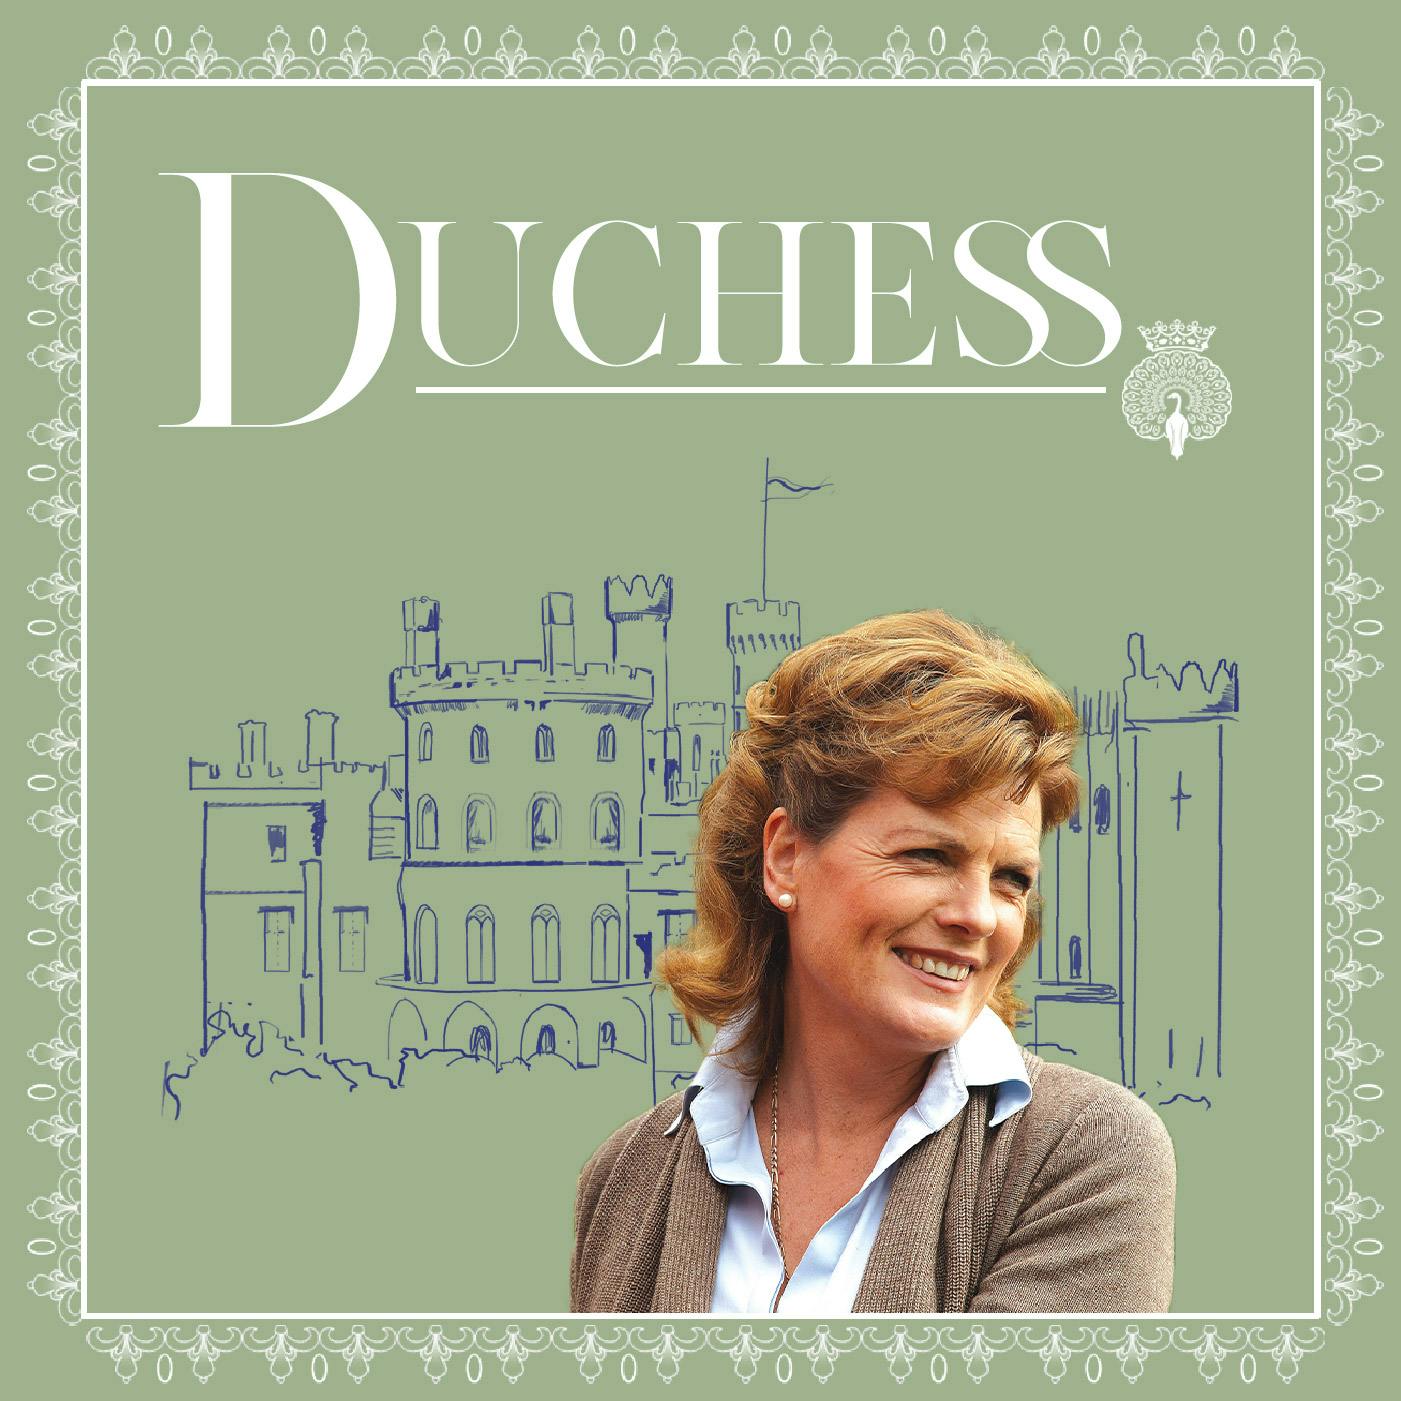 Welcome to Duchess Season 3